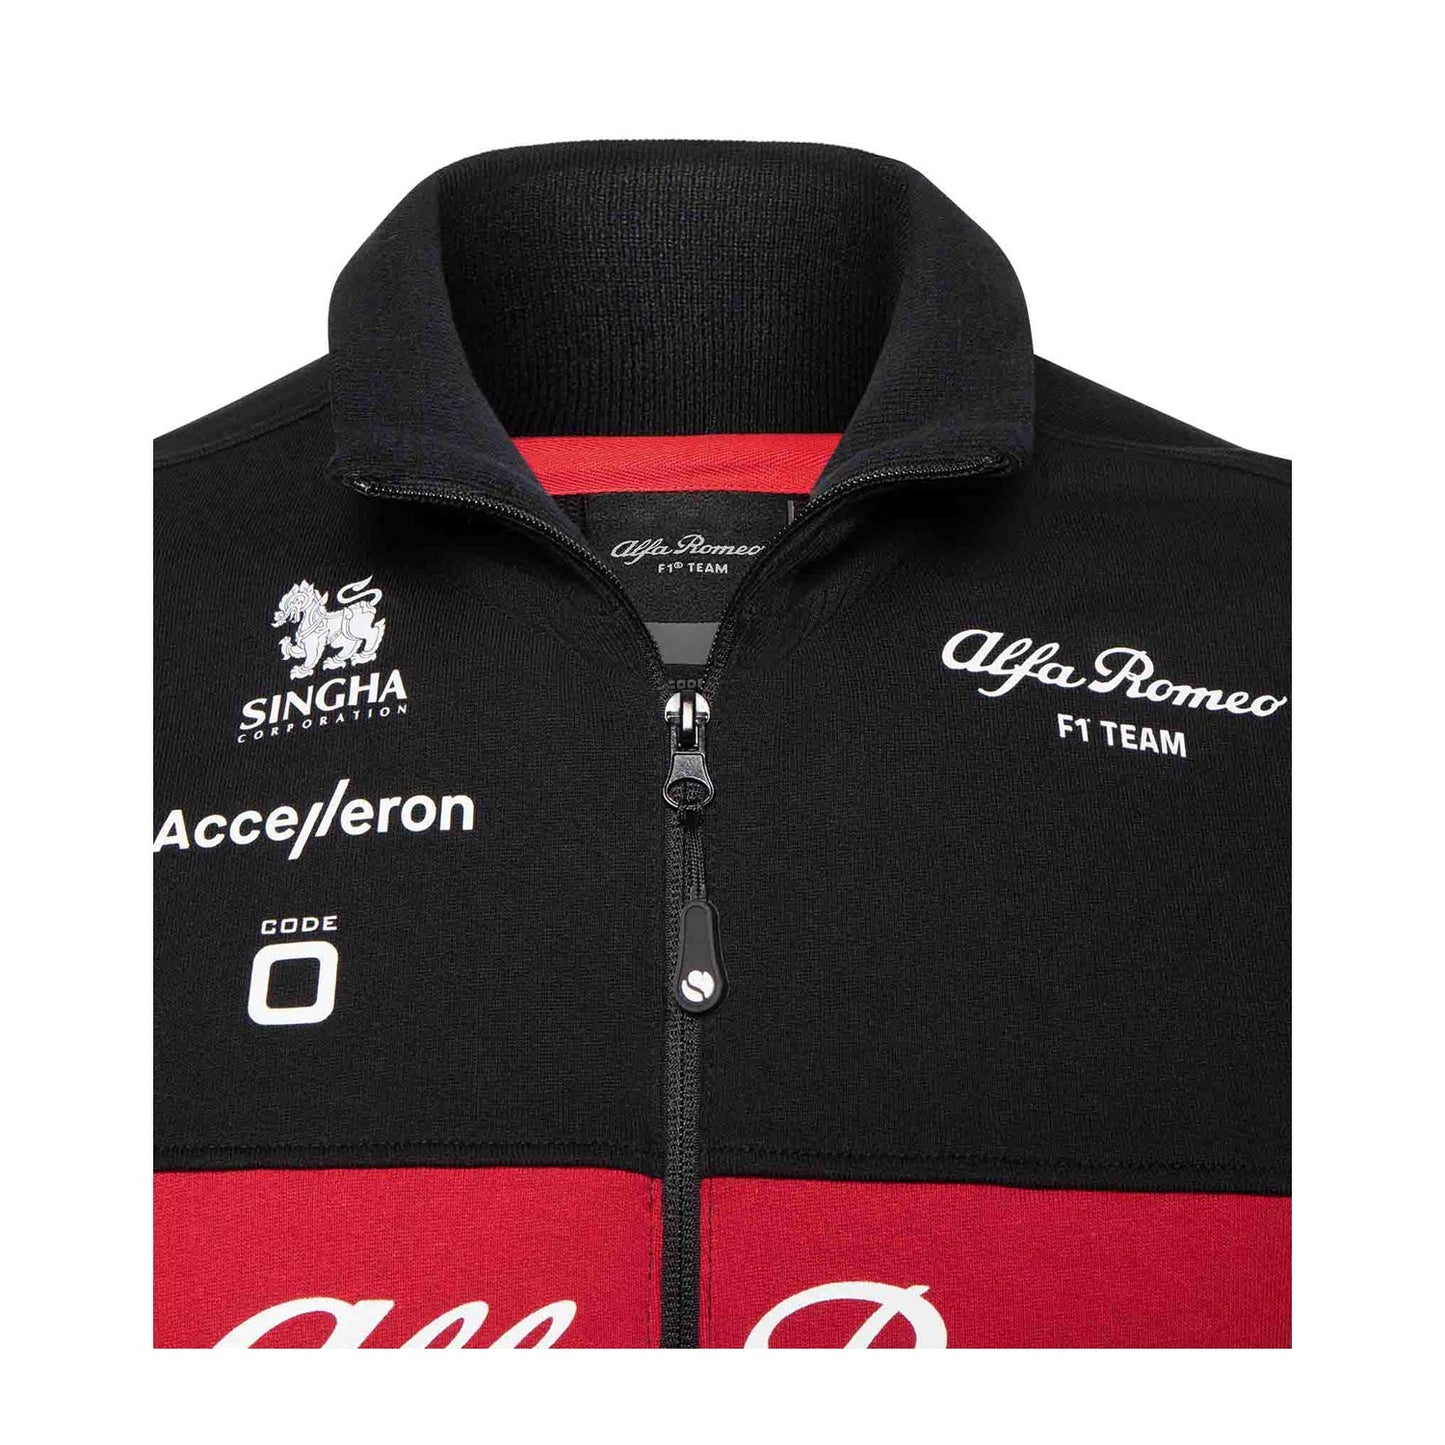 2023 Alfa Romeo Italy F1 Mens Team Sweatshirt